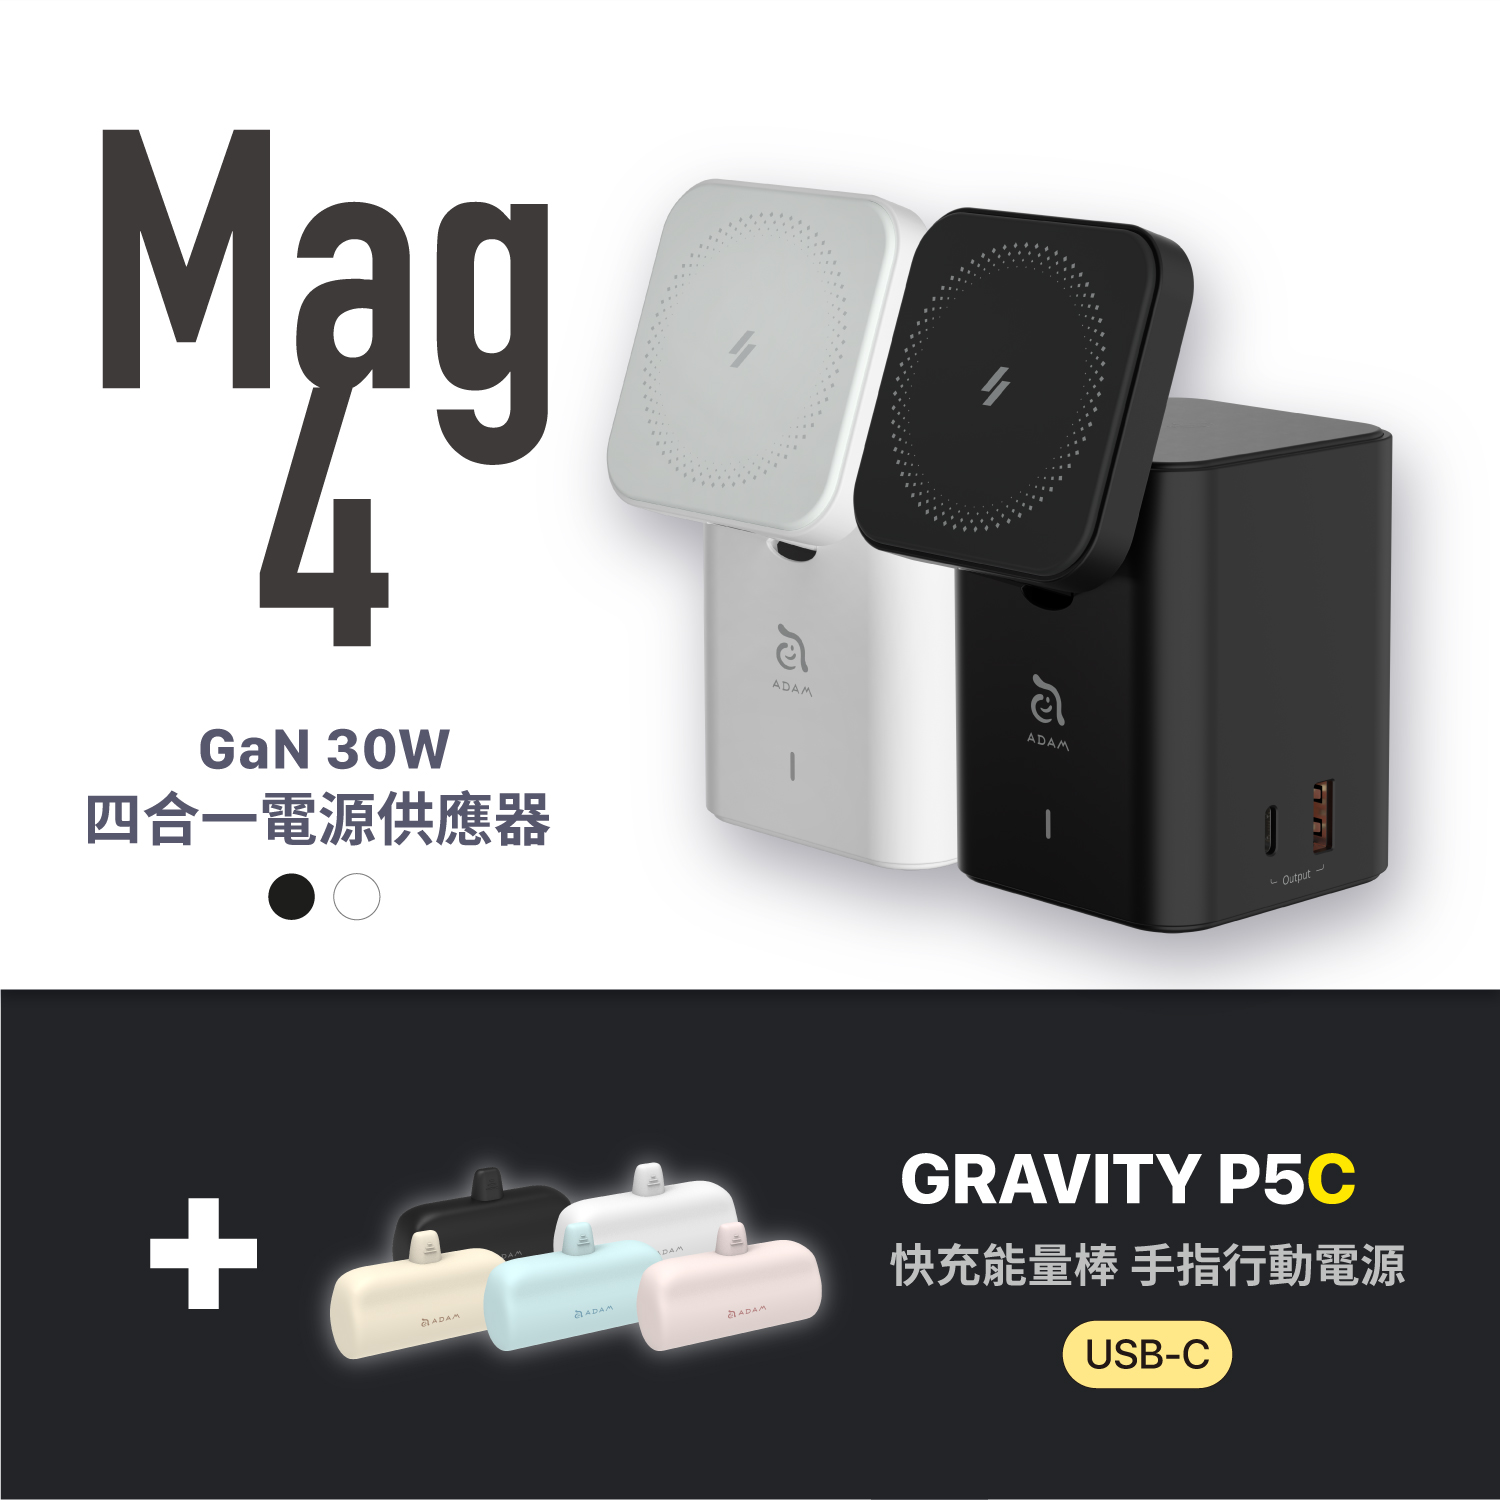 Mag 4 GaN 30W 四合一電源供應器_GRAVITY P5C USB-C 口袋型行動電源